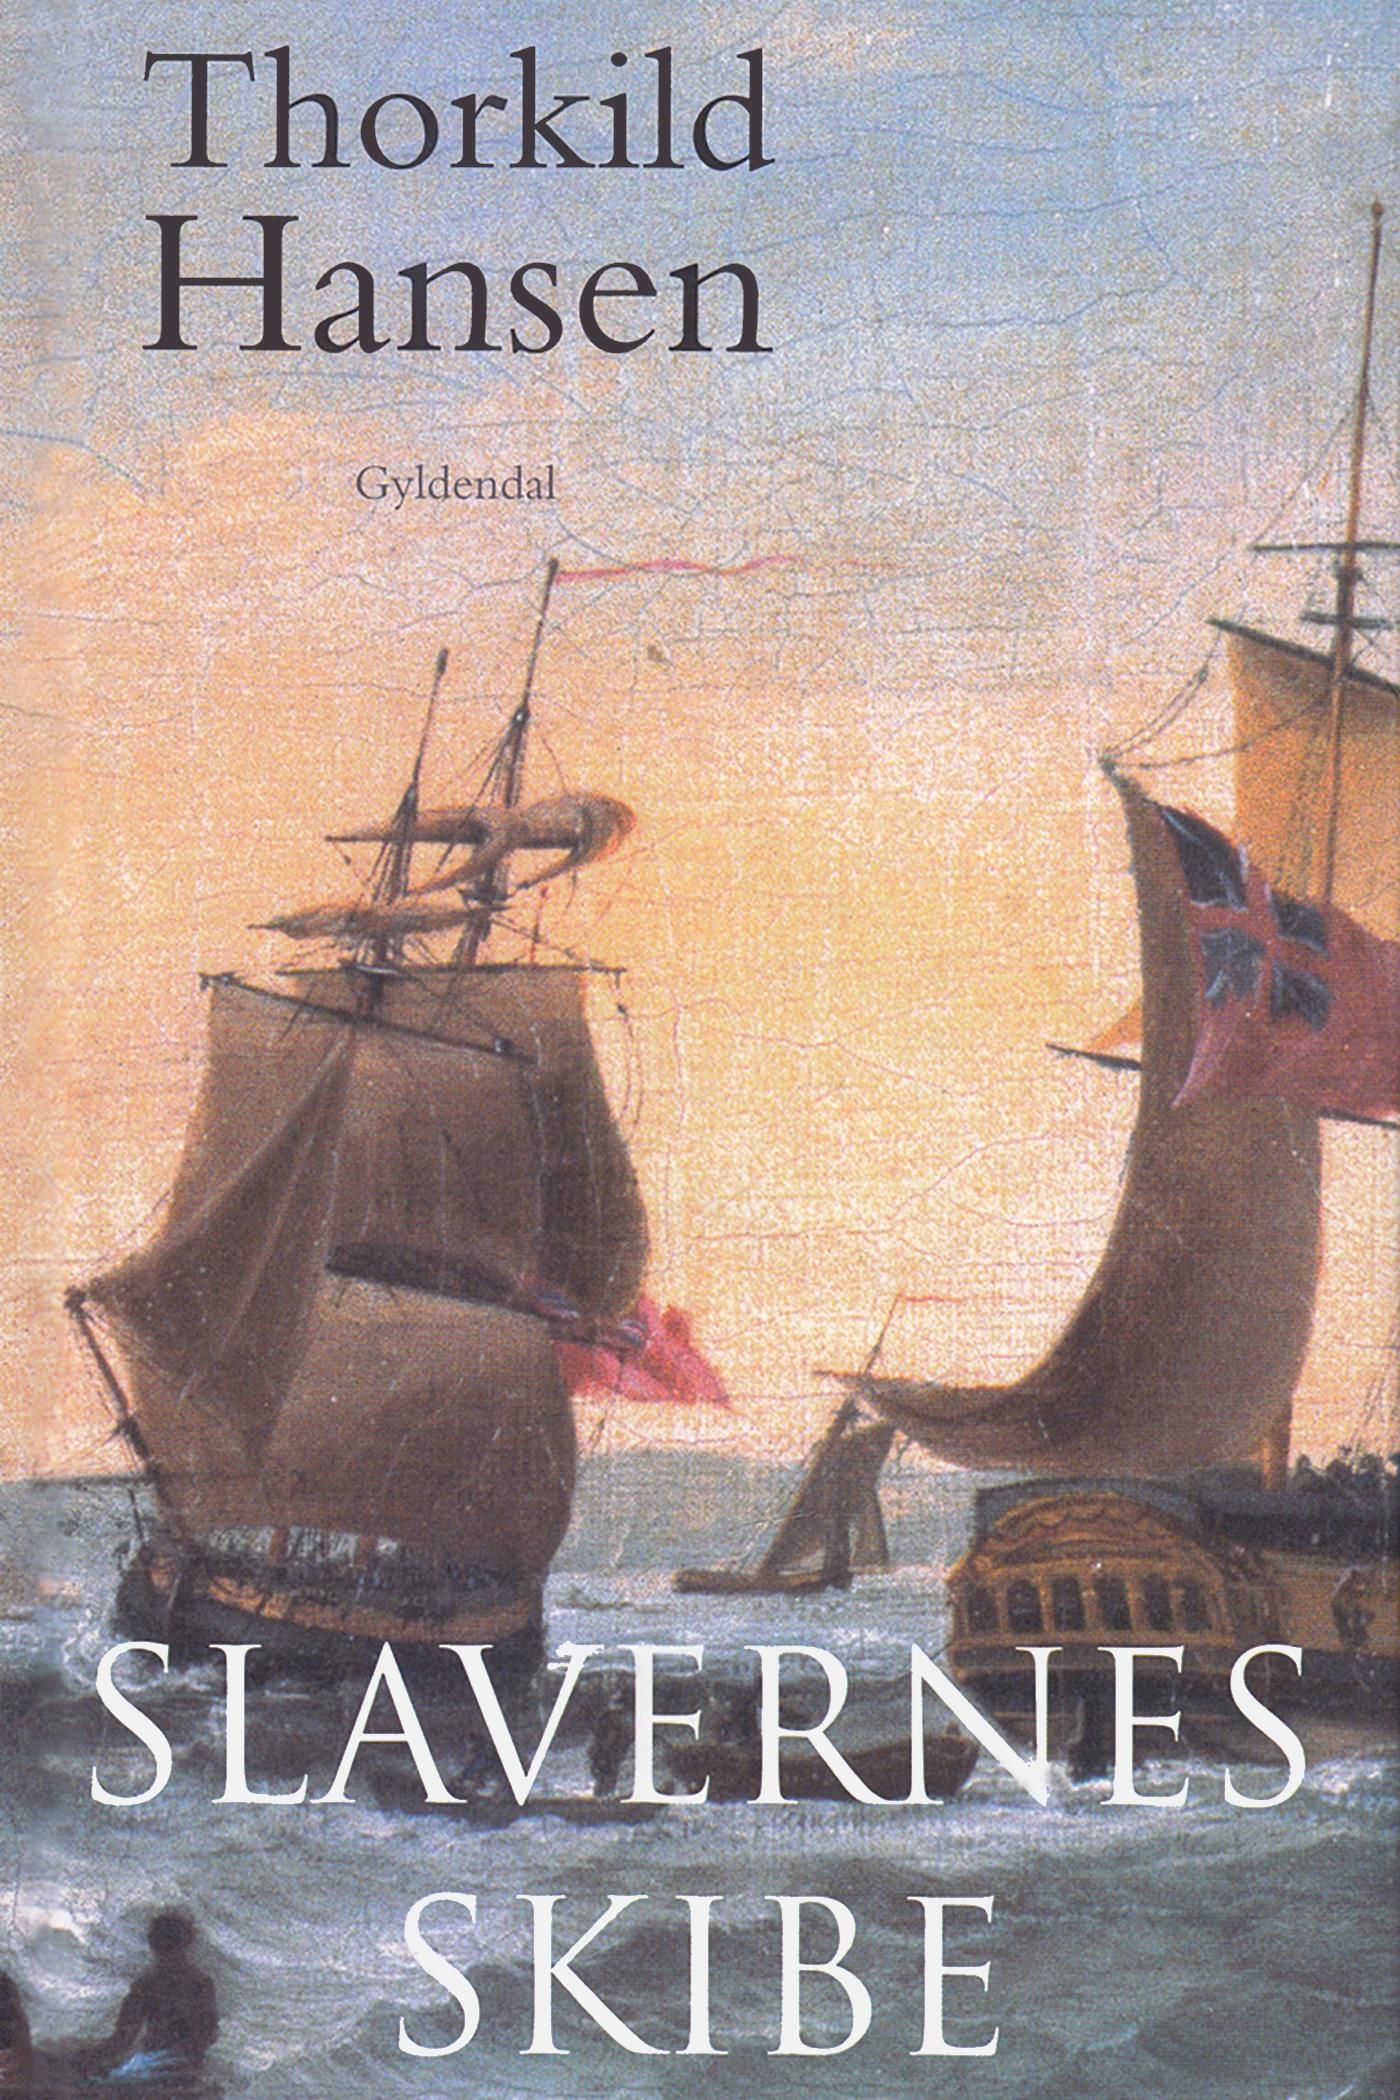 Slavernes skibe, eBook by Thorkild Hansen